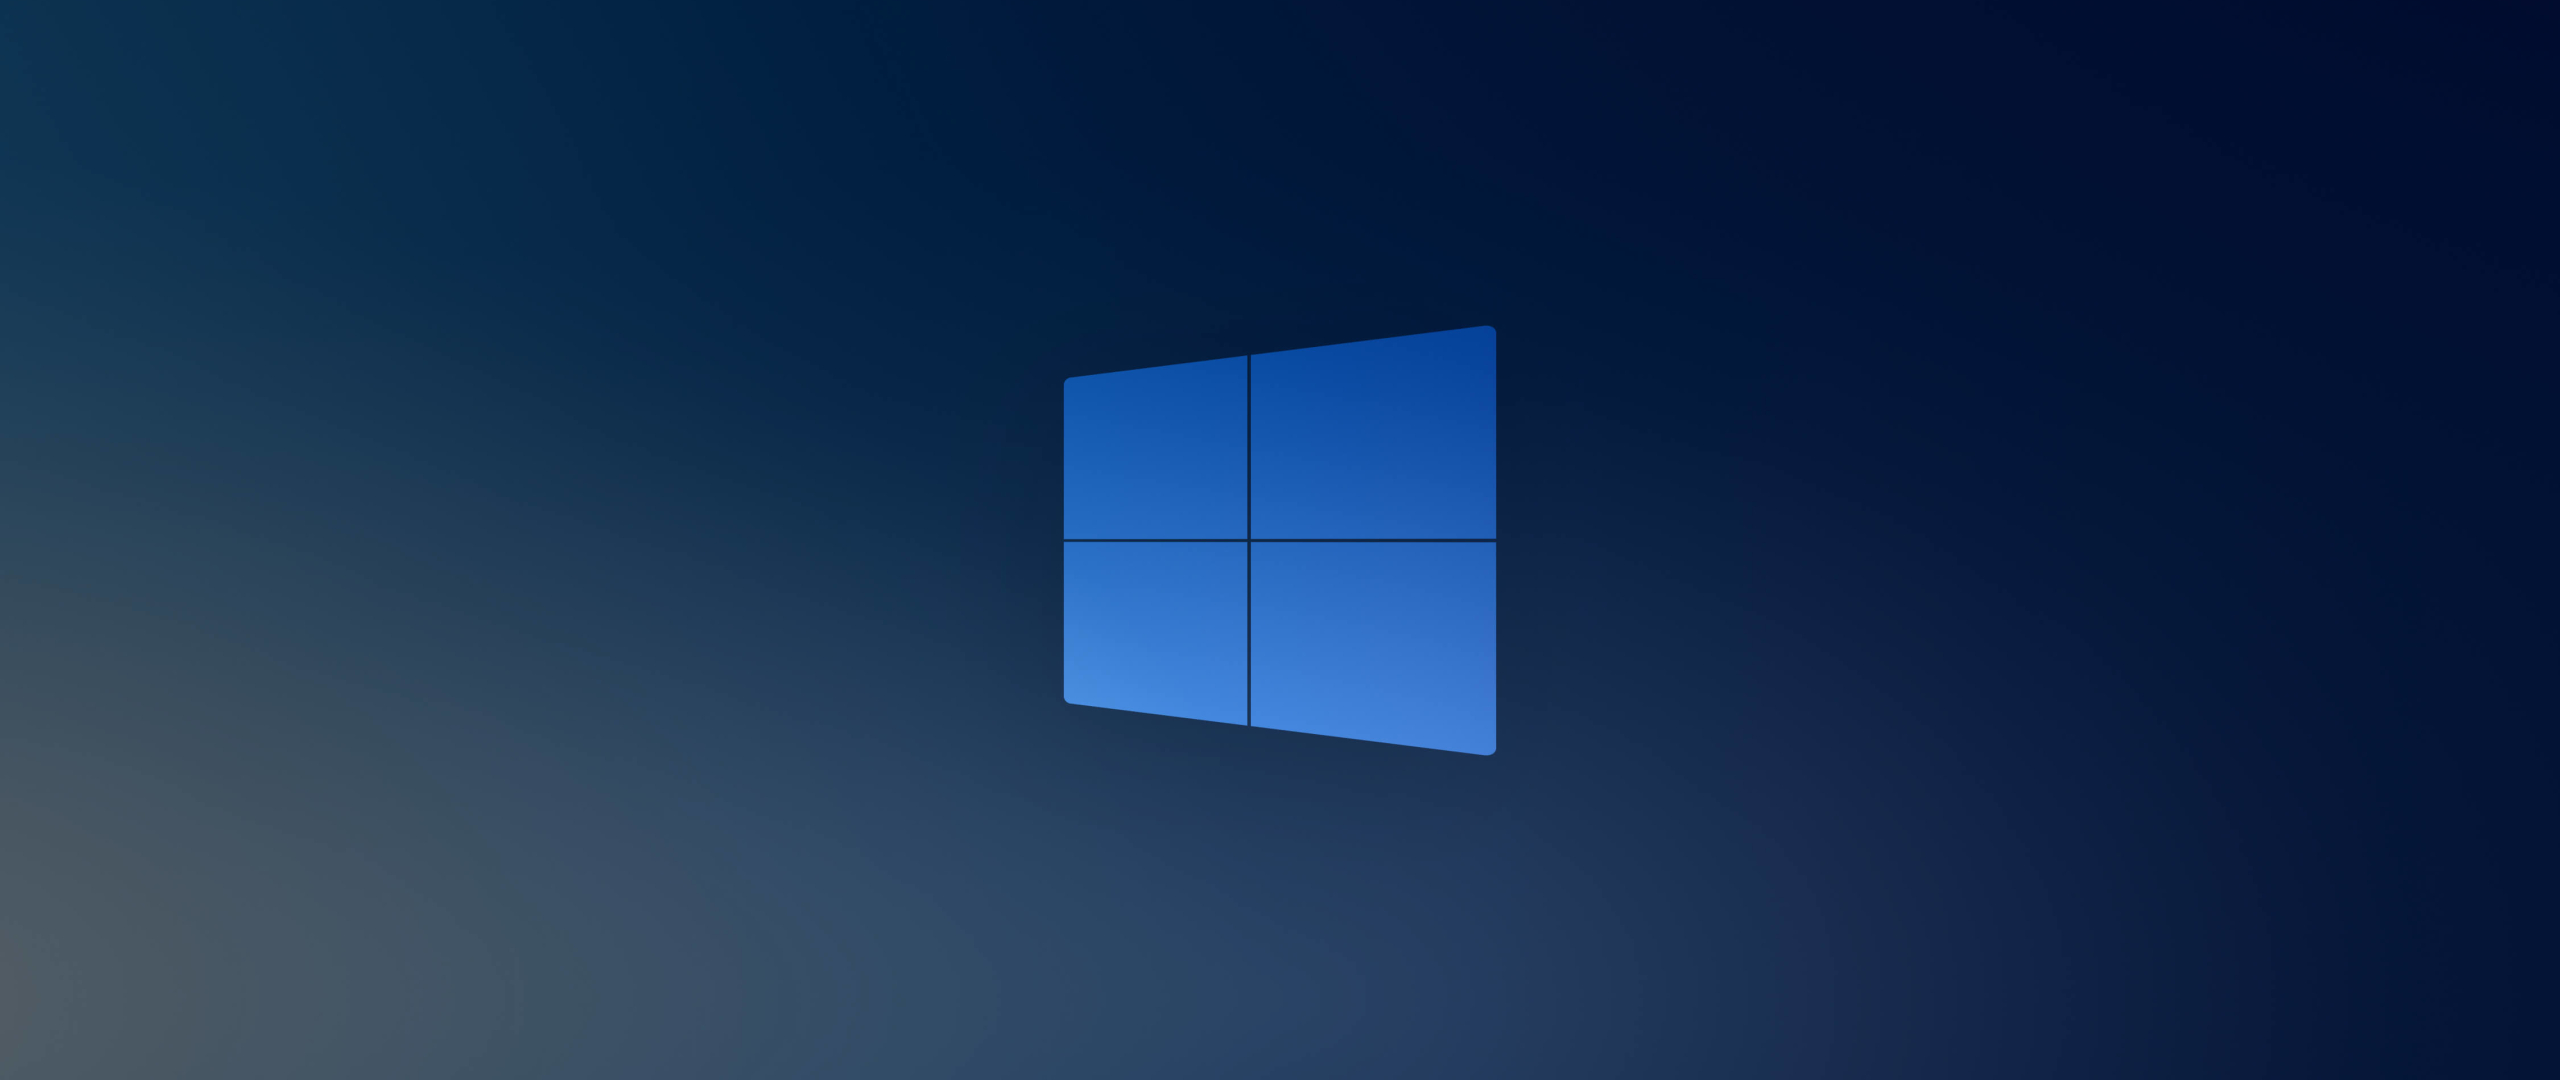 Windows 10X Wallpaper 4K